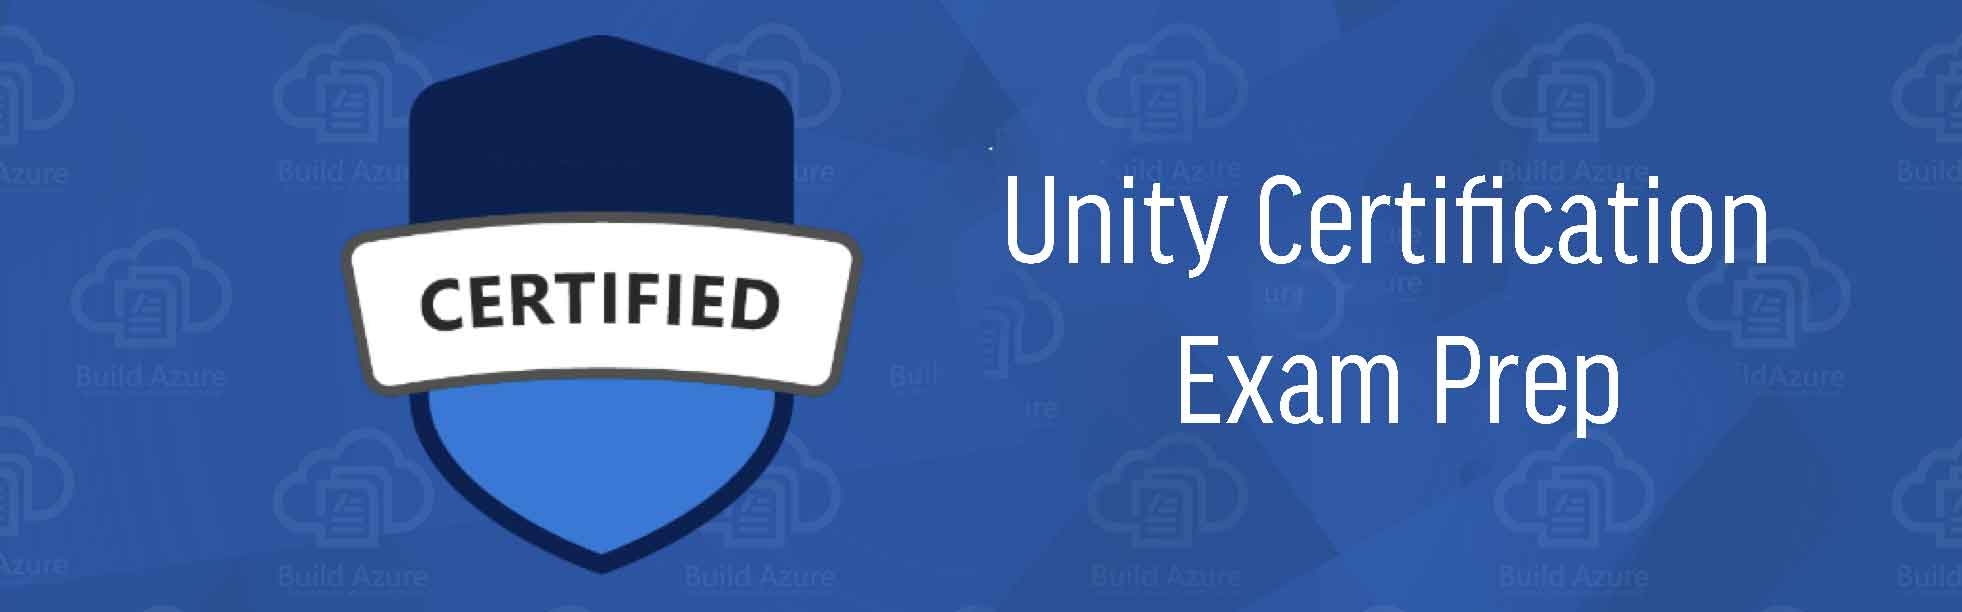 Unity Certification Exam Prep